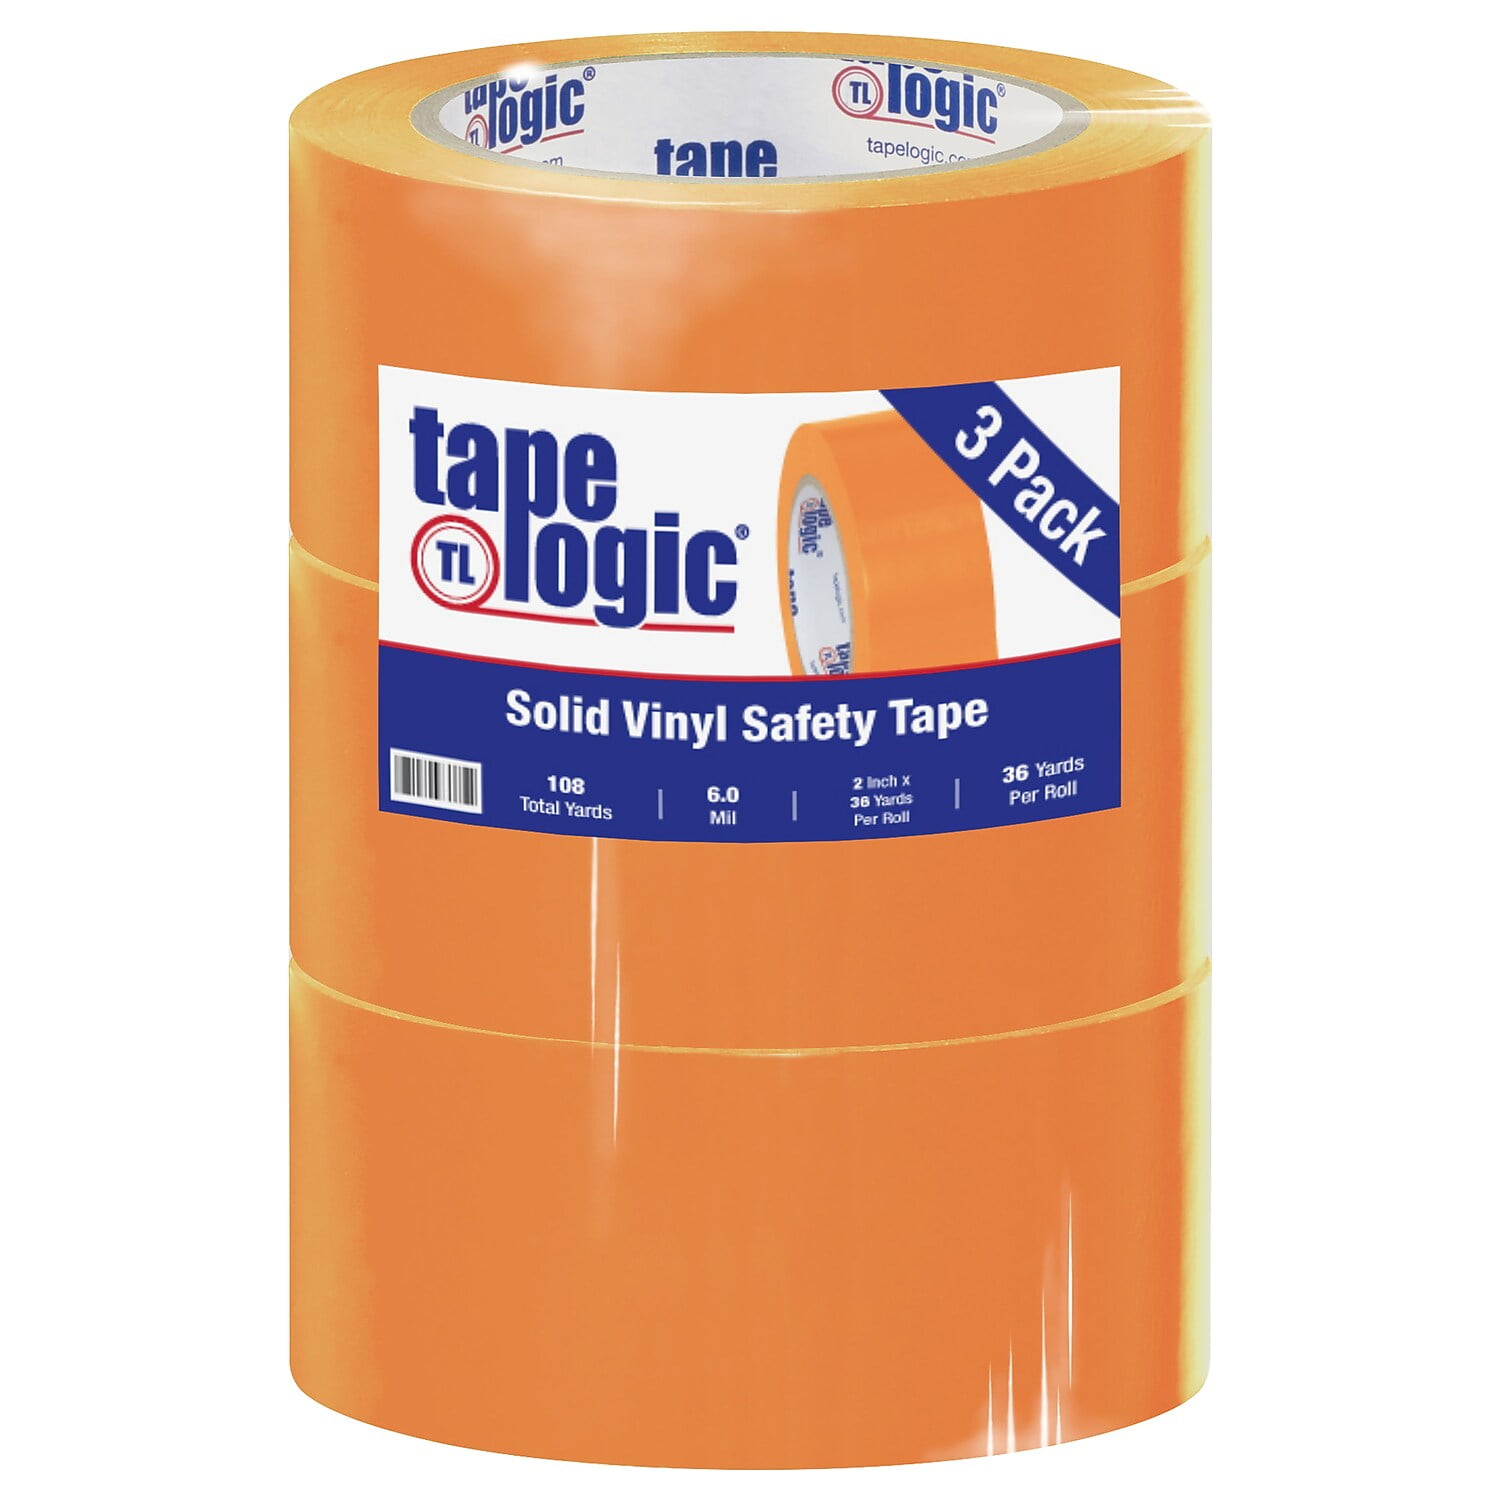 Tape Logic T92363pko 2 In. X 36 Yards Orange Solid Vinyl Safety Tape - Pack Of 3